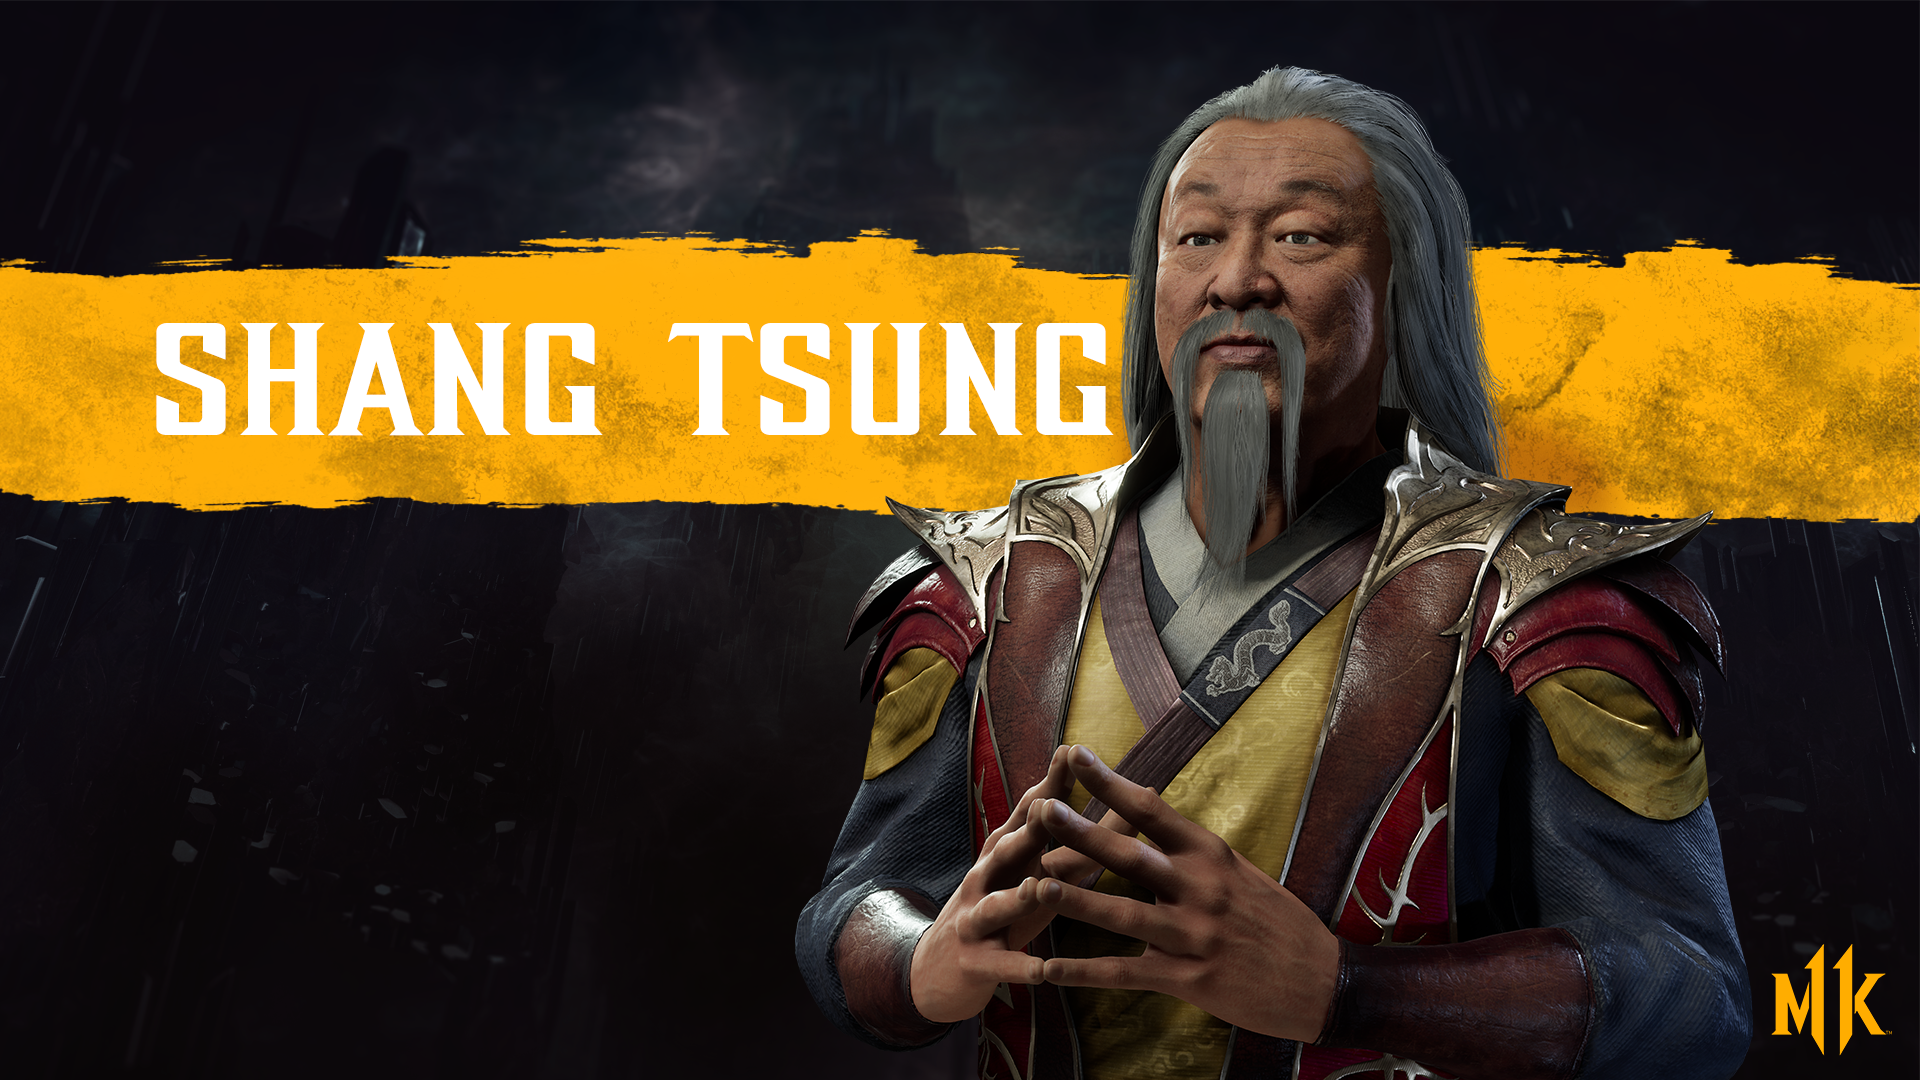 MORTAL KOMBAT 11 - Shang Tsung Teased By Original Film Actor! 